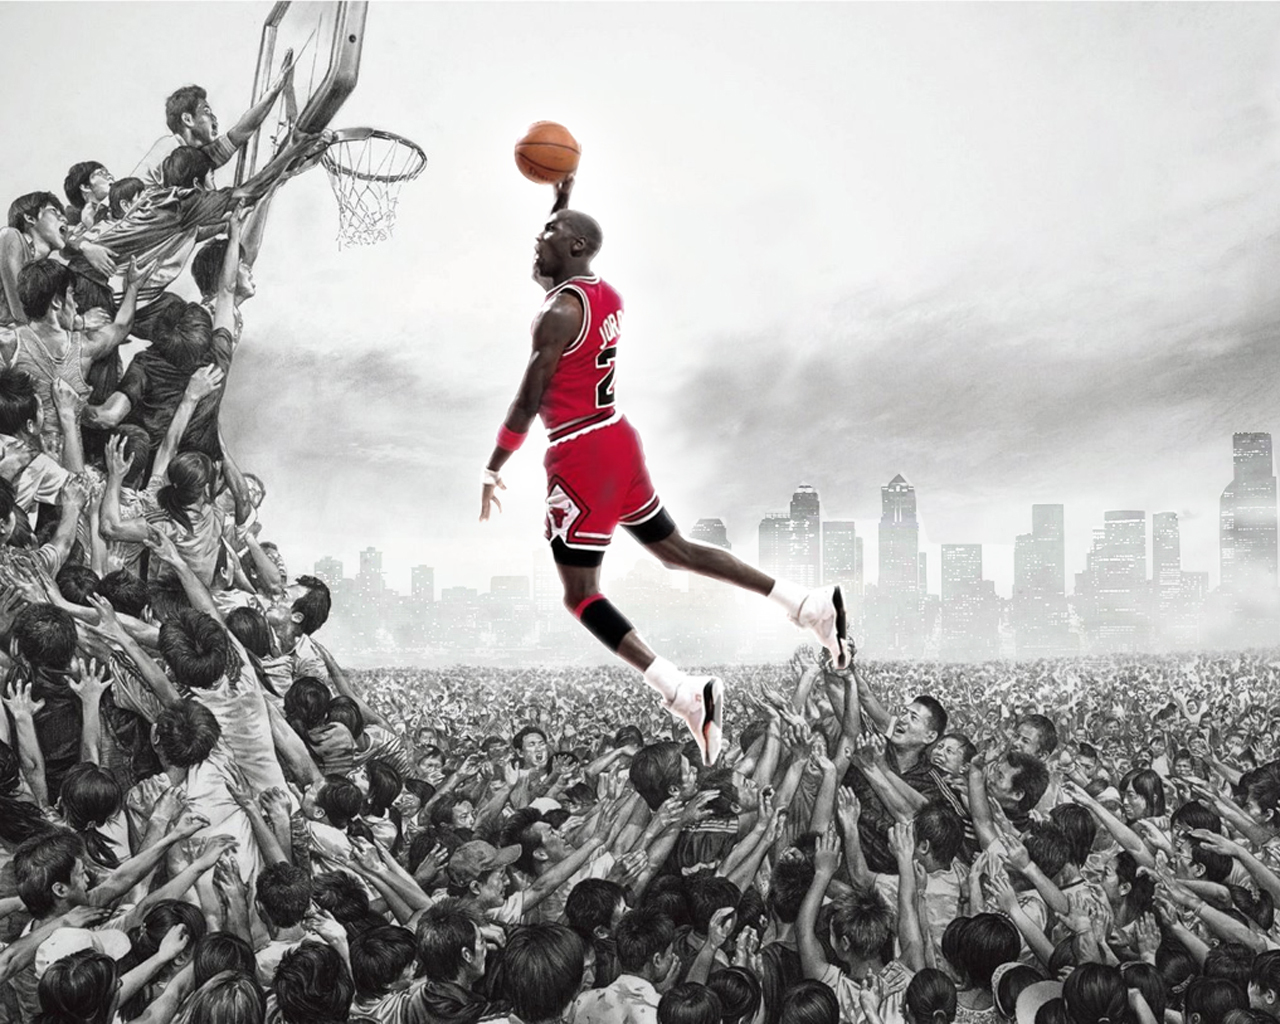 Michael Jordan Wallpaper HD Pictures 2013 1280x1024 pixel Popular HD